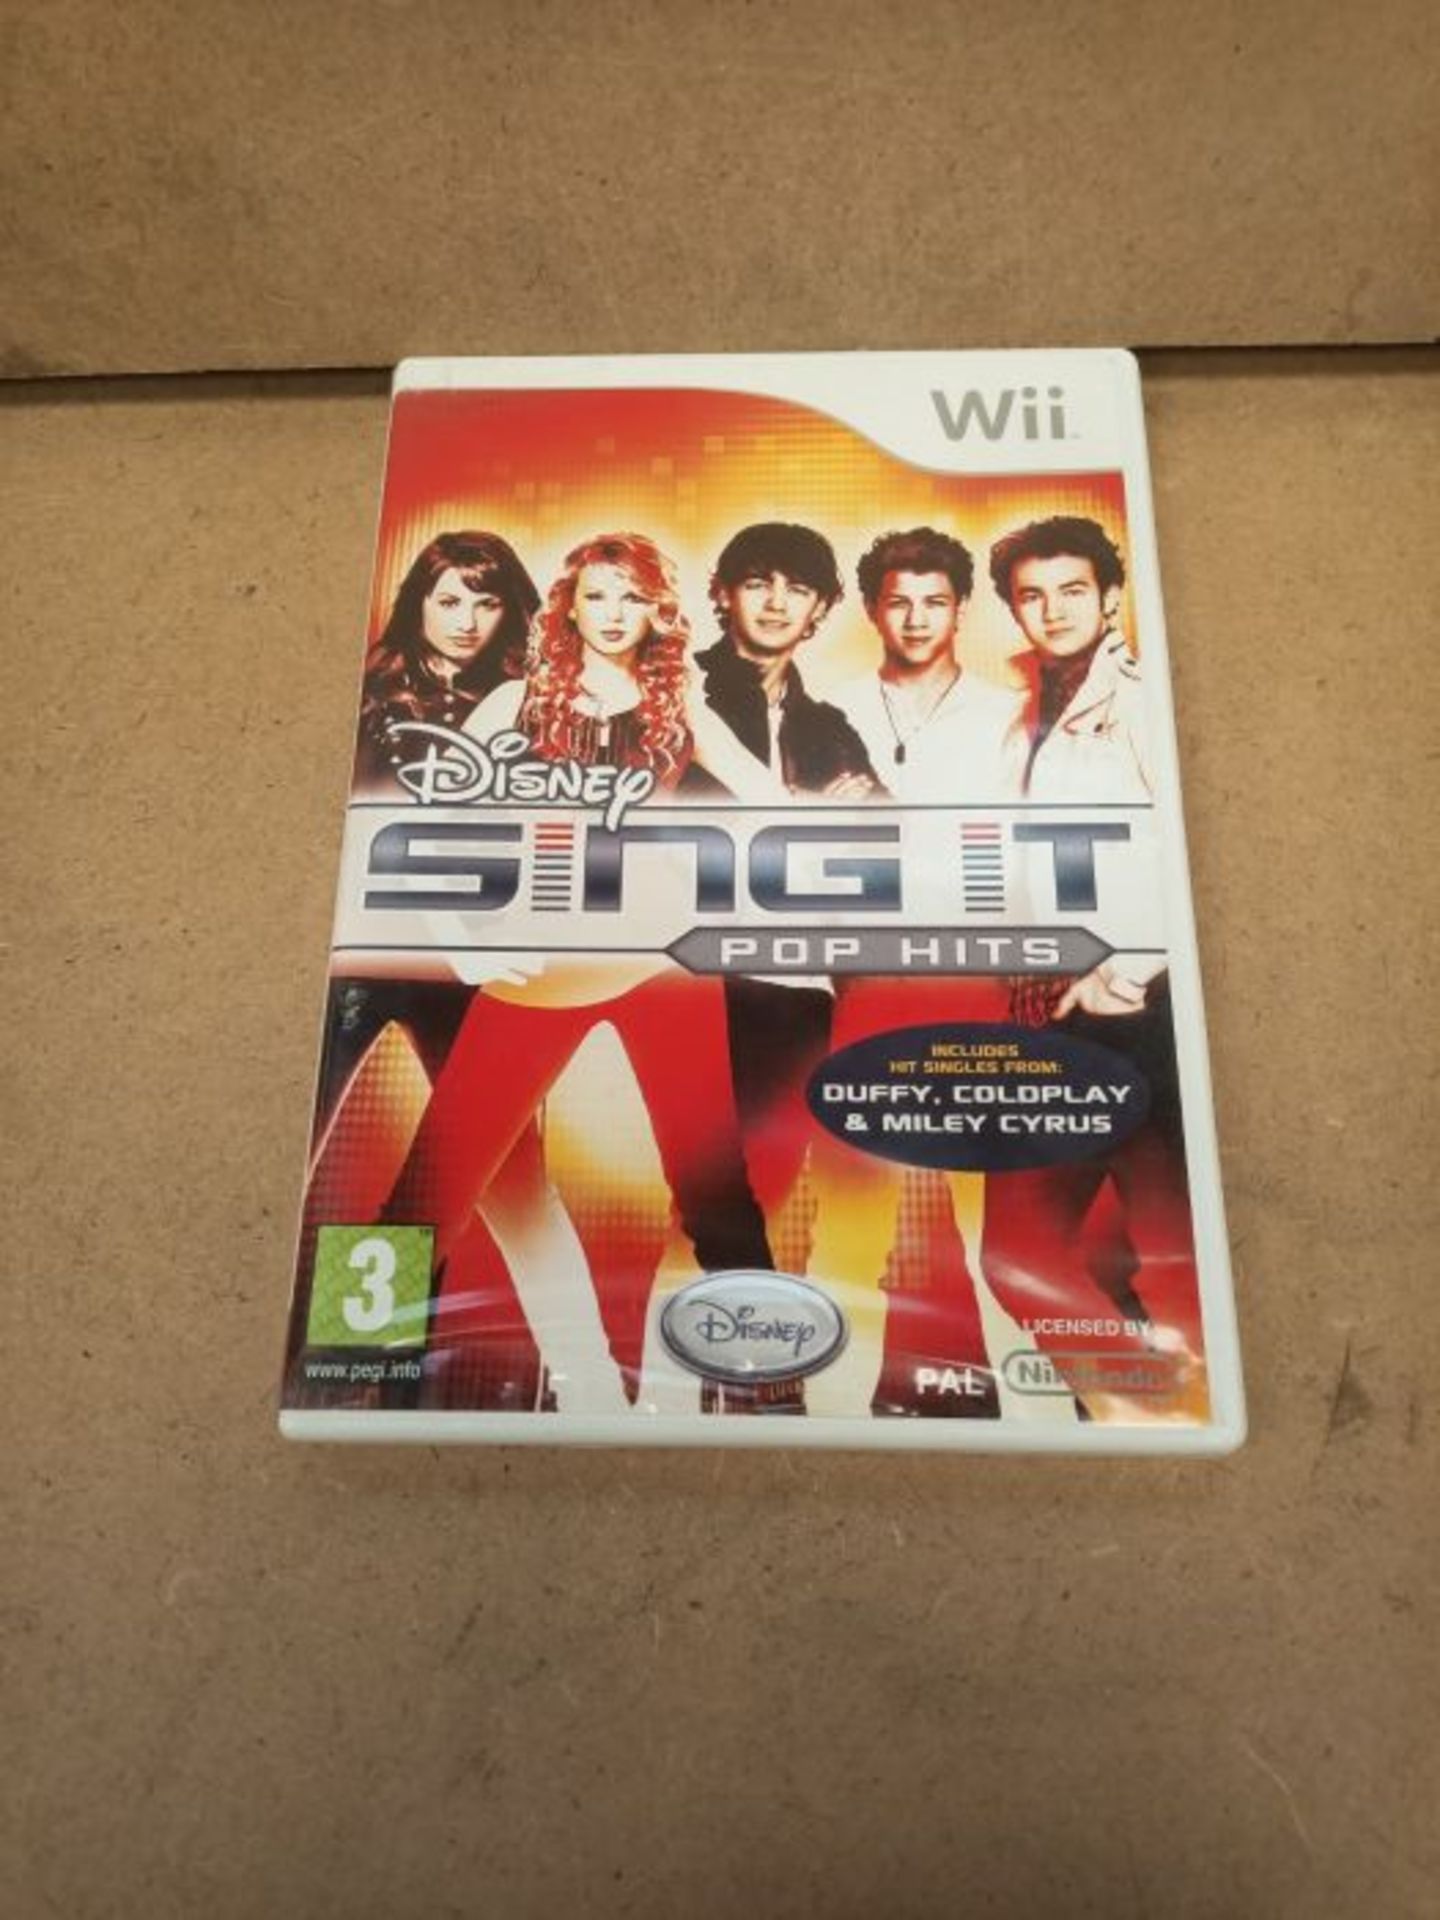 Disney Sing It: Pop Hits (Wii) - Image 2 of 6